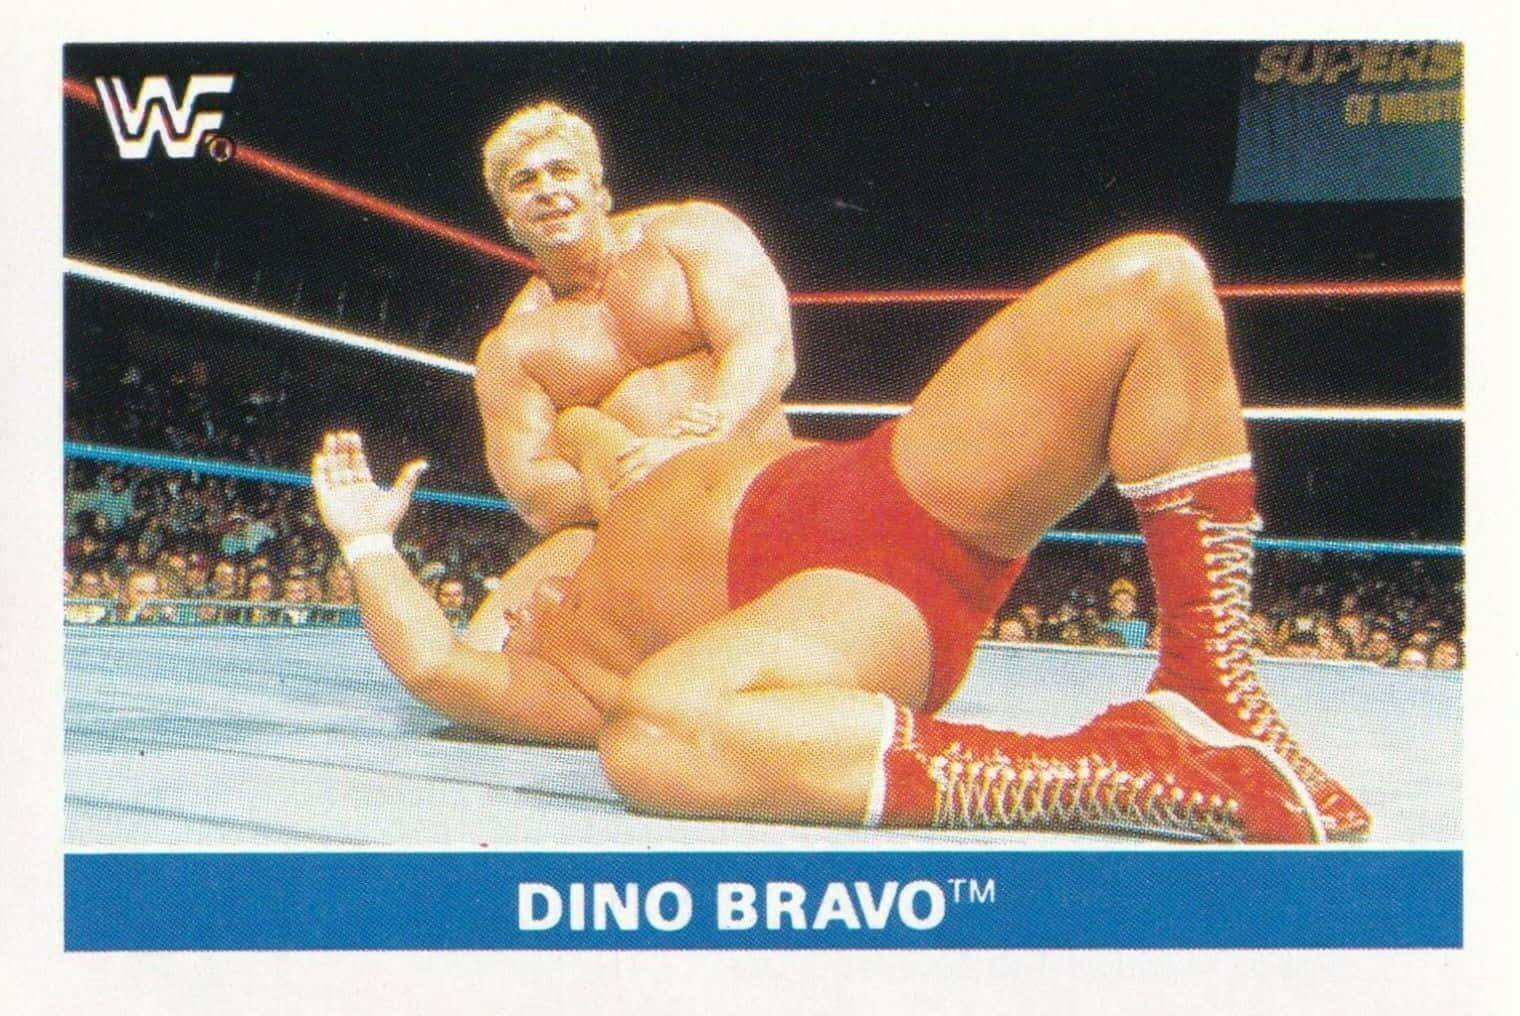 Dinobravo 1991 Wwf Wrestling Card: Dino Bravo 1991 Wwf Wrestling-kortet. Wallpaper